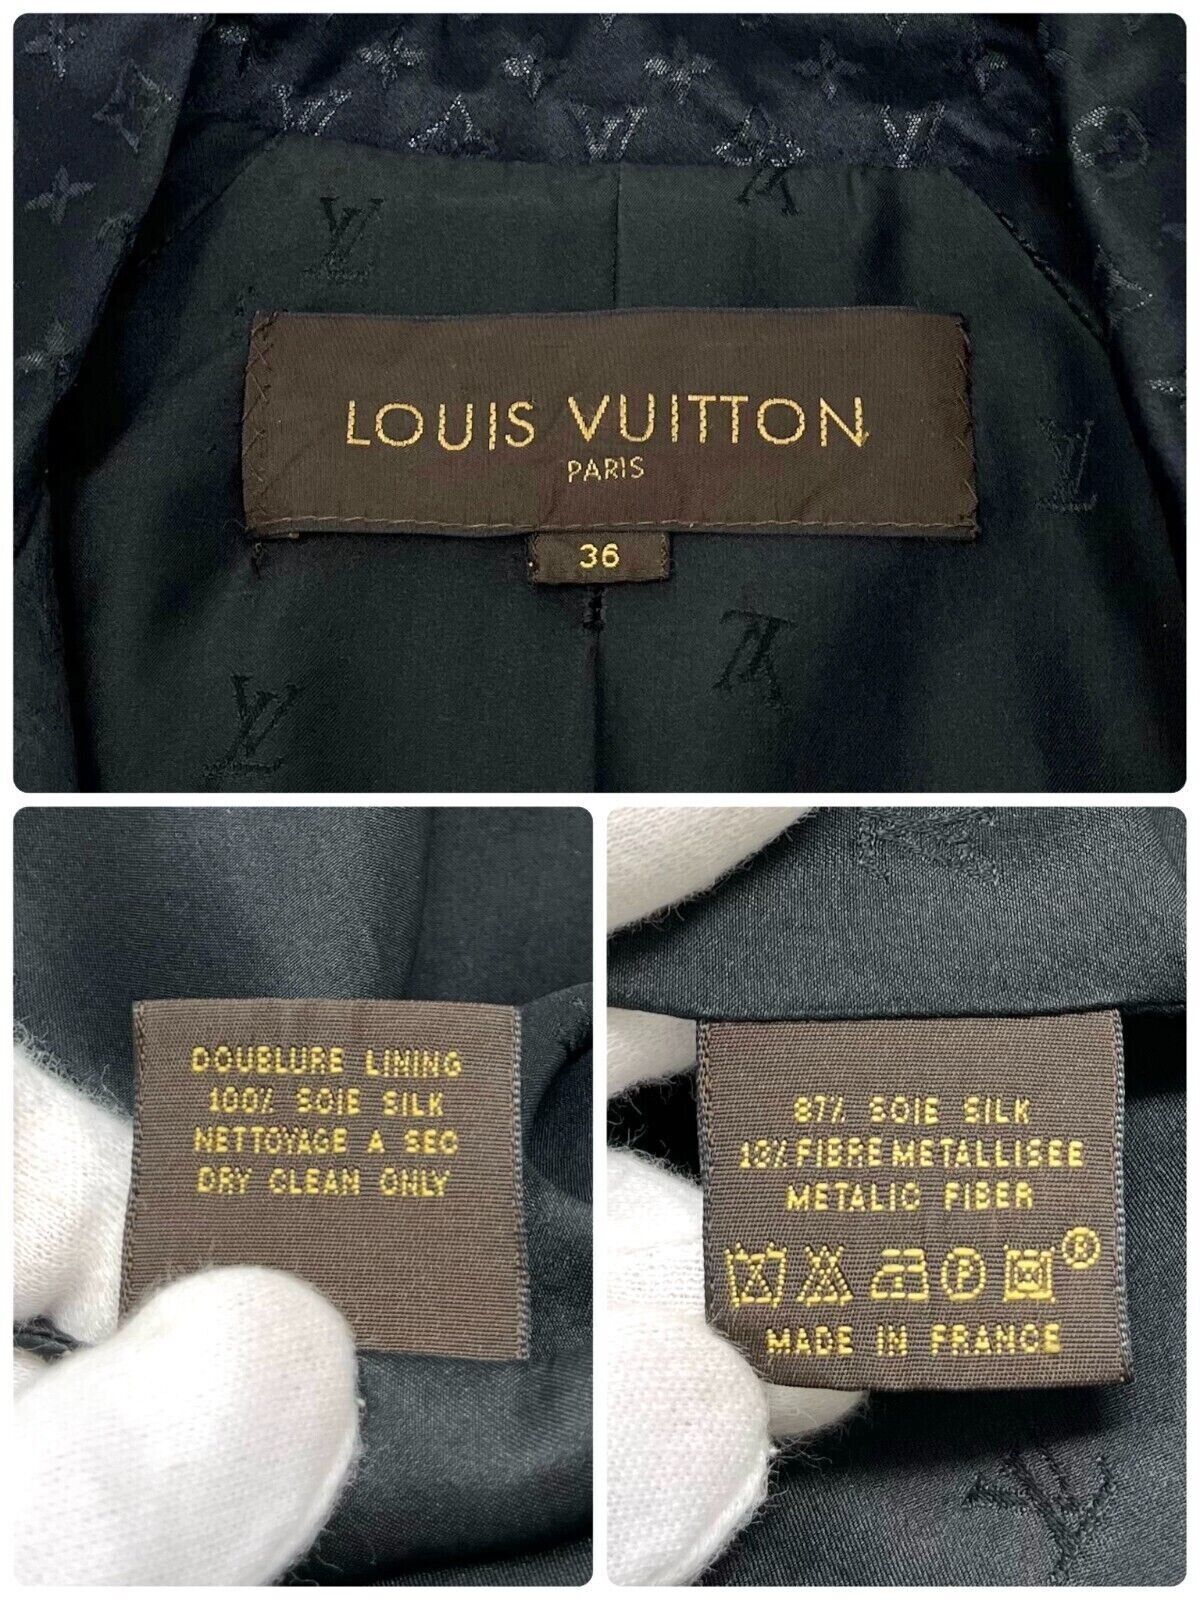 LOUIS VUITTON Vintage Monogram Logo Trench Coat Jacket #36 Black Silk RankAB+